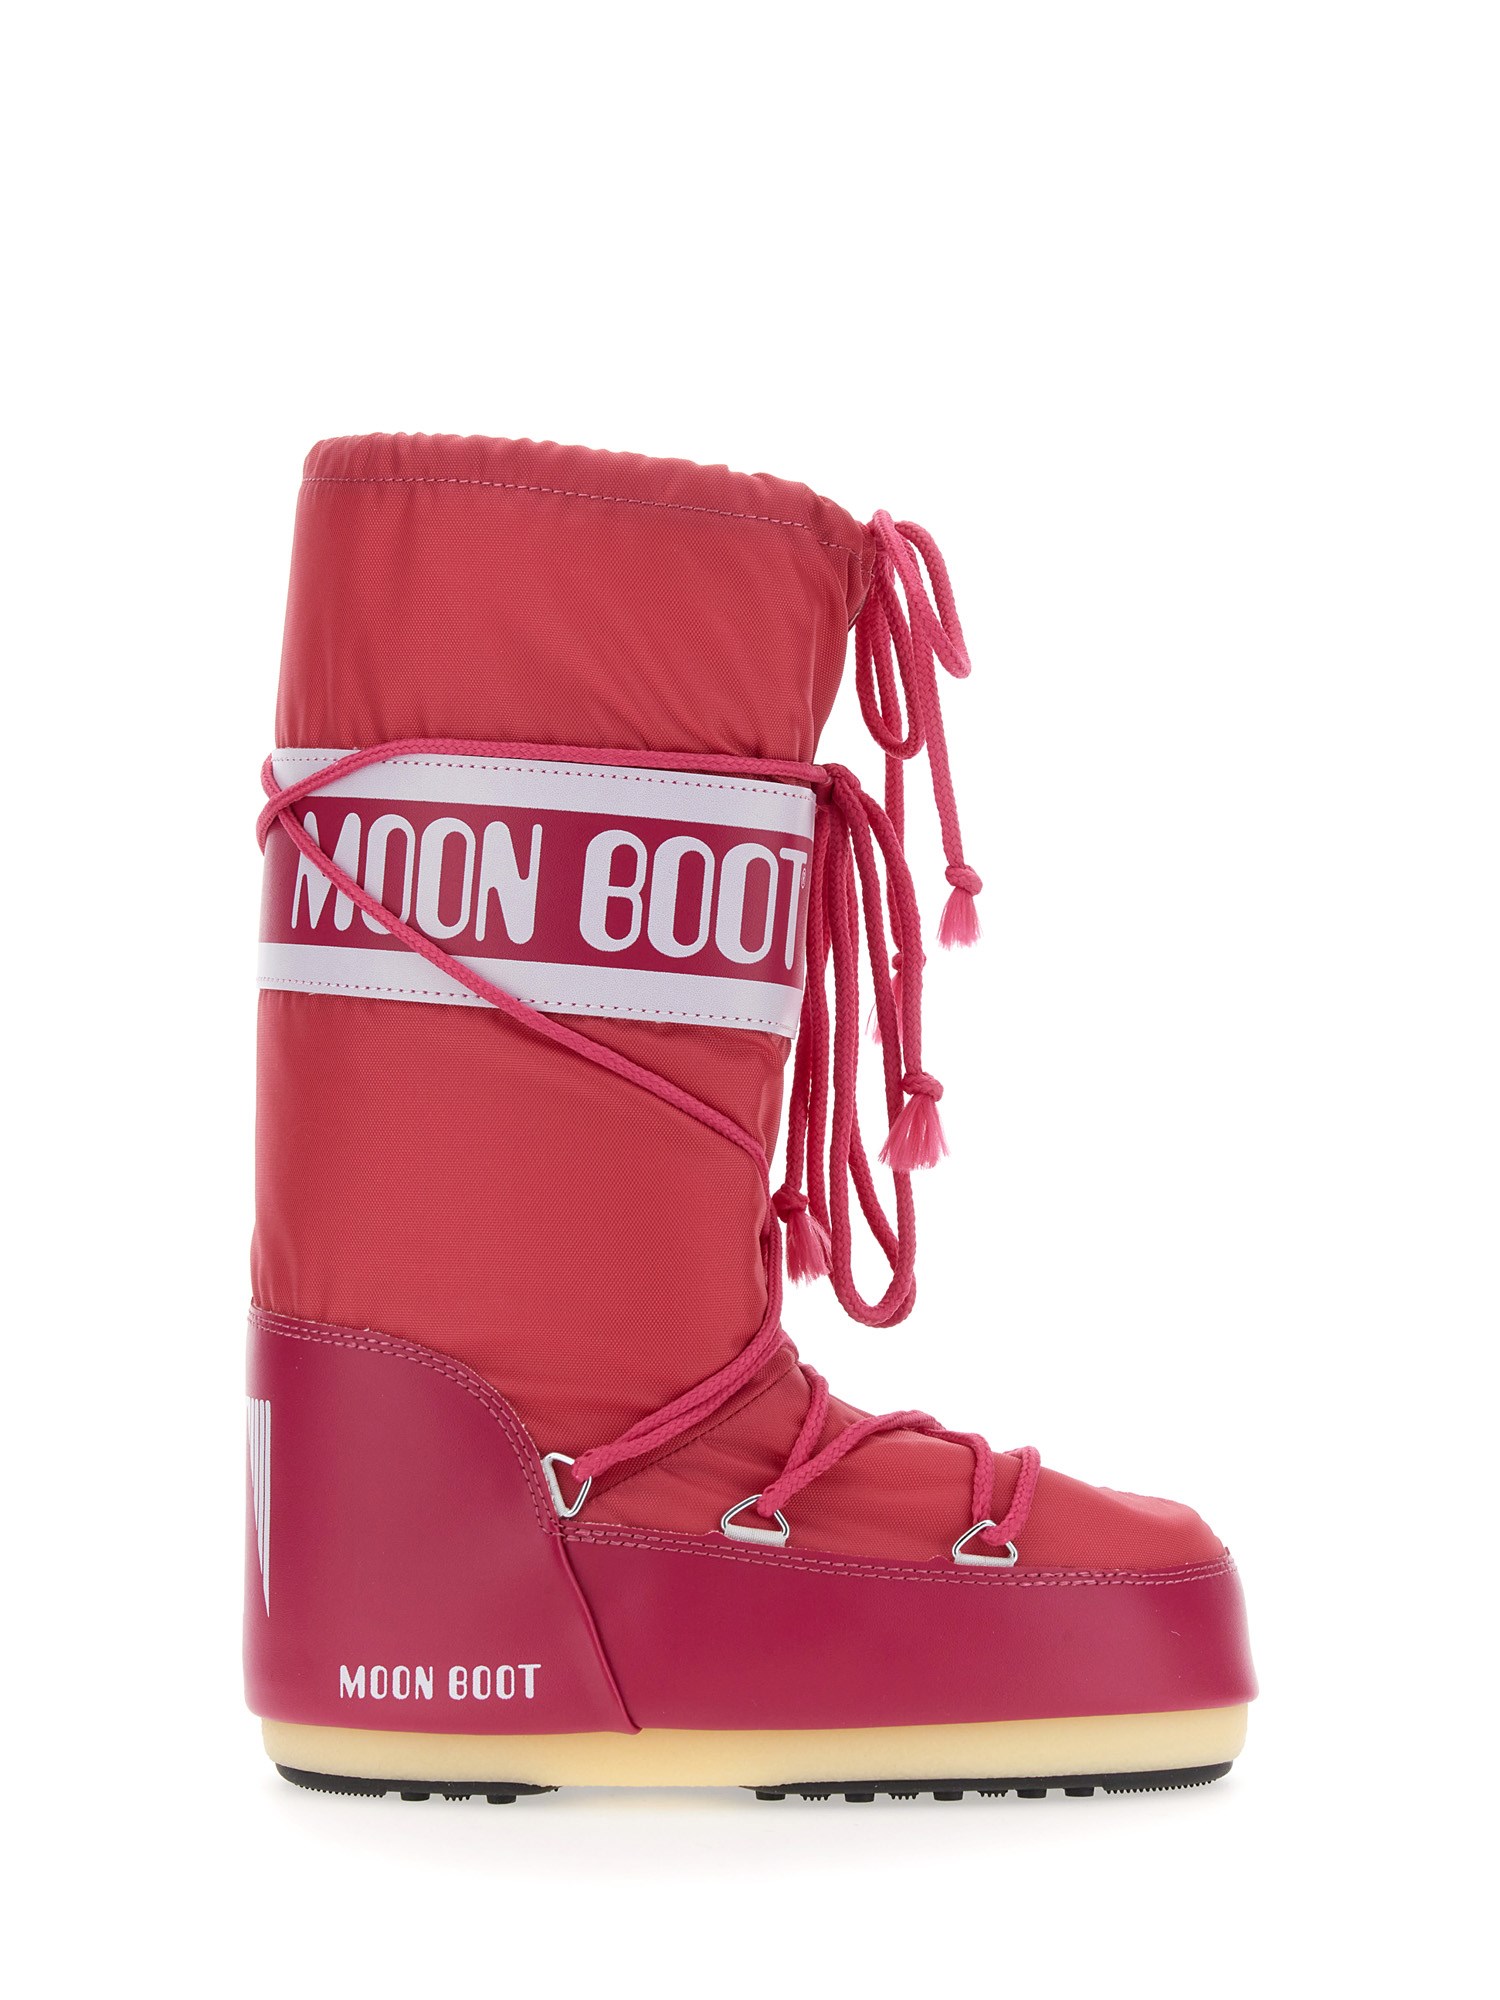 Moon Boot moon boot icon boot